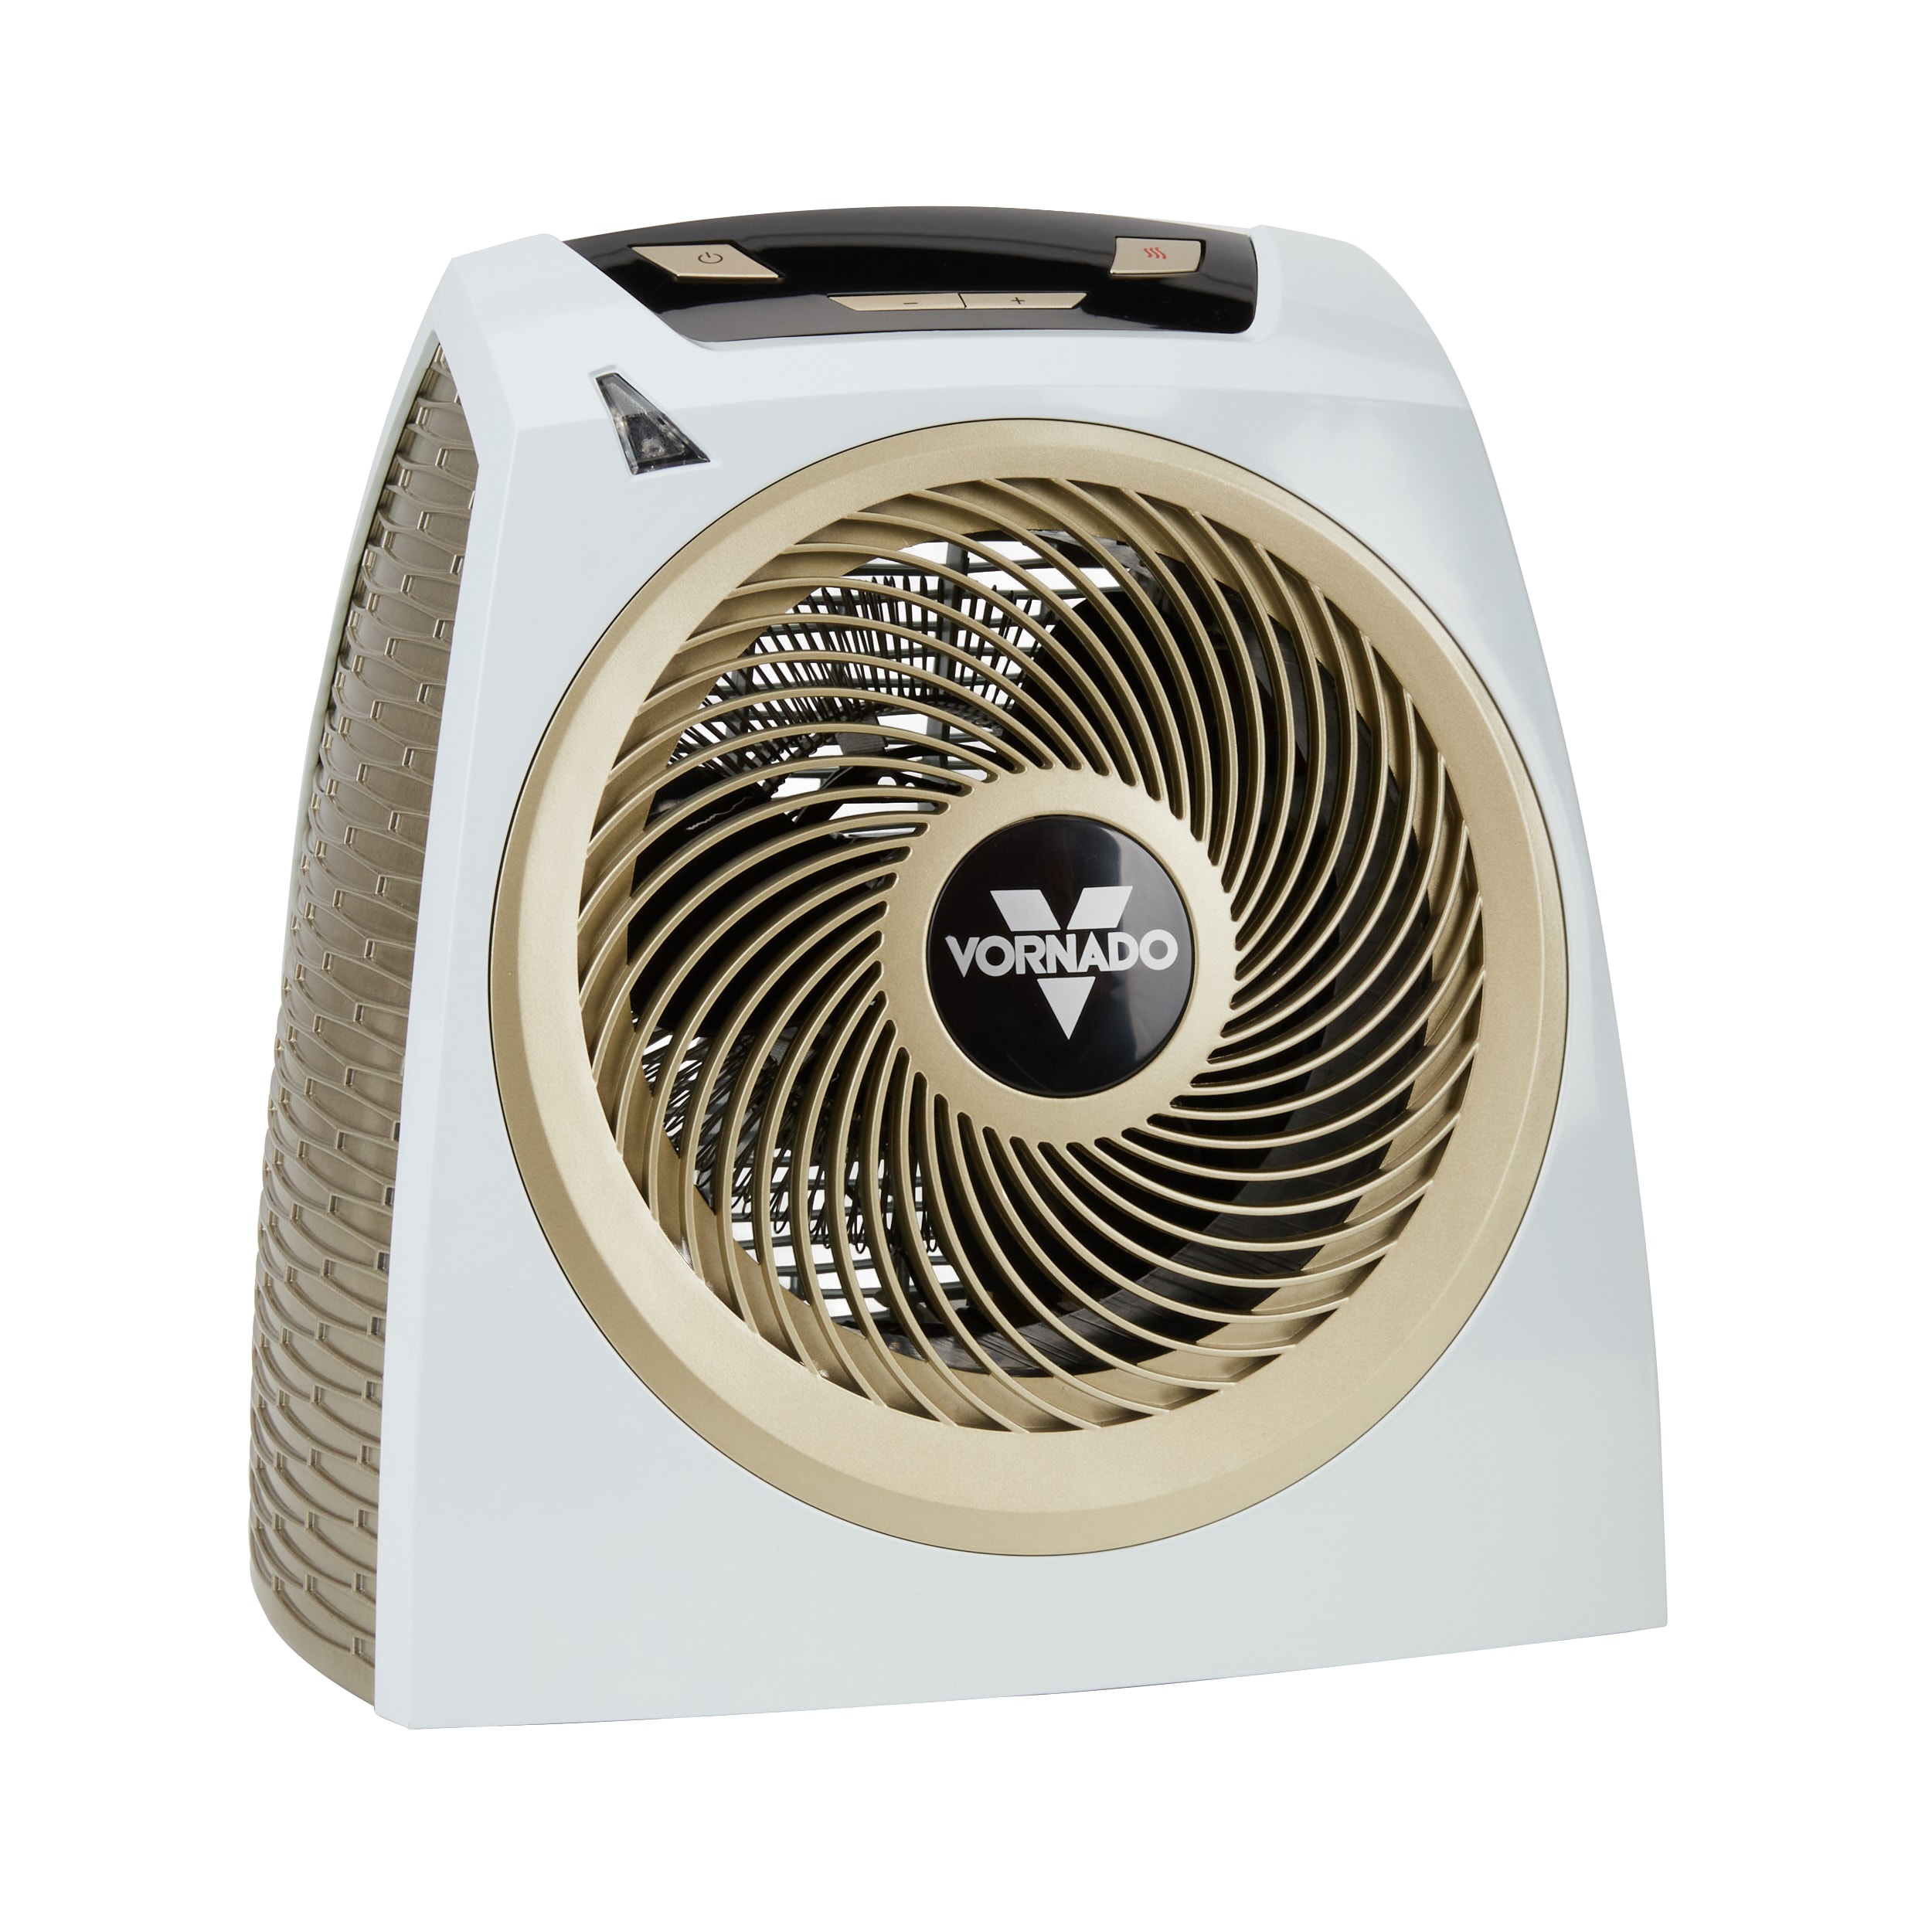 Vornado Up to 1500-Watt Fan Compact Personal Indoor Electric Space